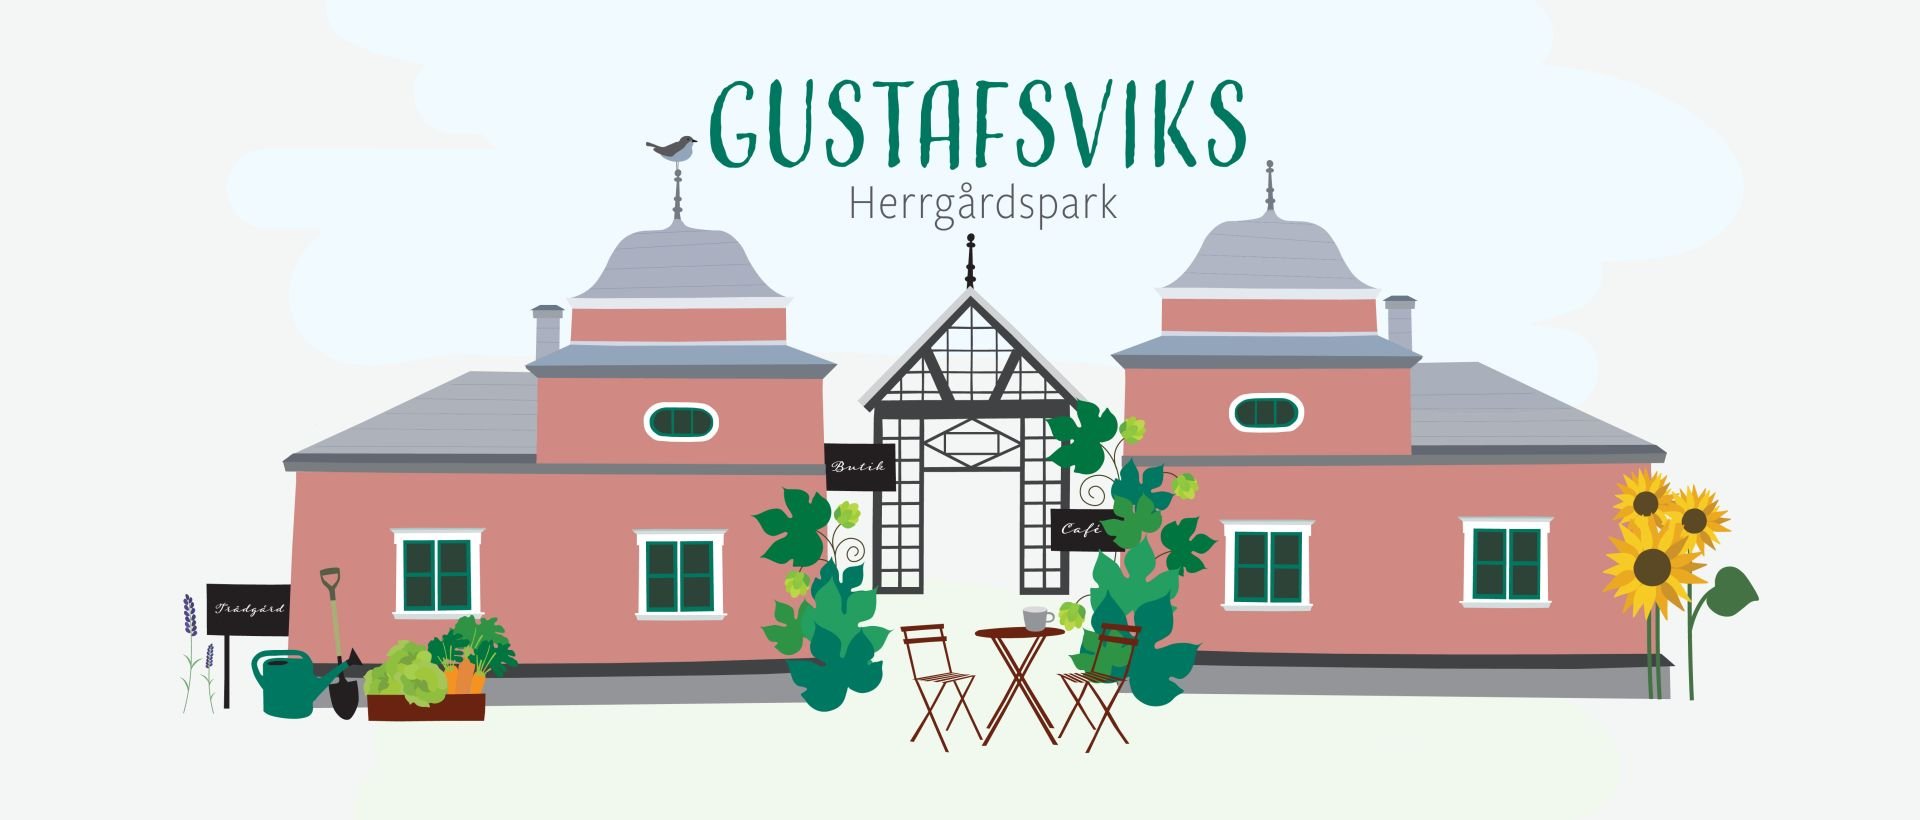 Gustafsviks Herrgårdspark